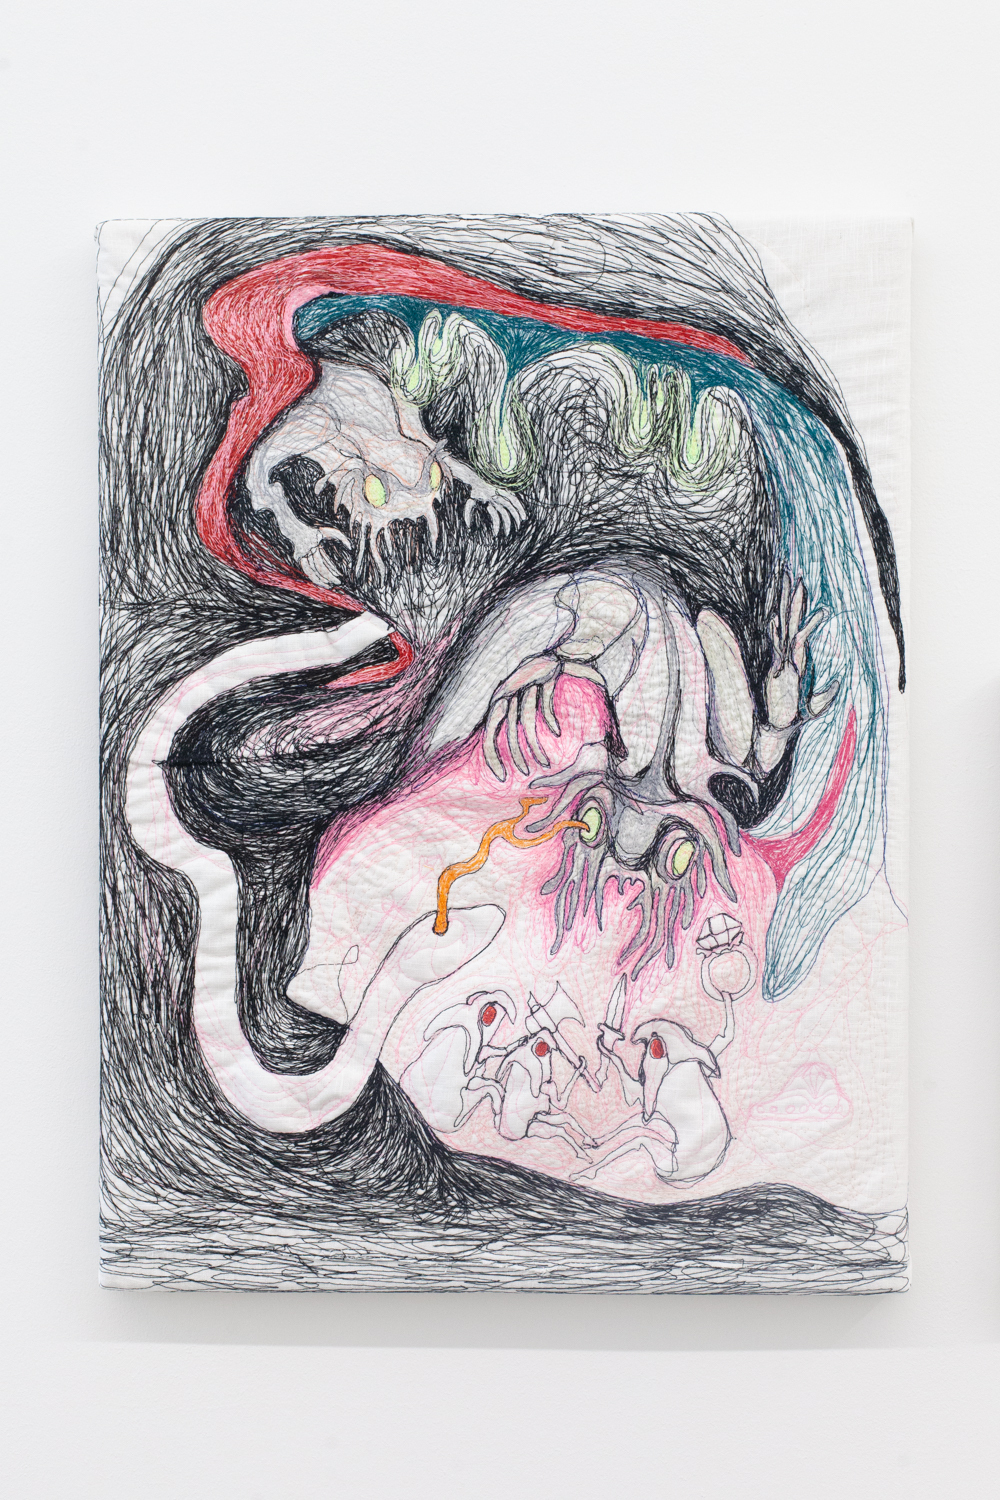 Mary-Audrey Ramirez, Geh weg!, 2021, yarn on linen, 60 x 45 cm